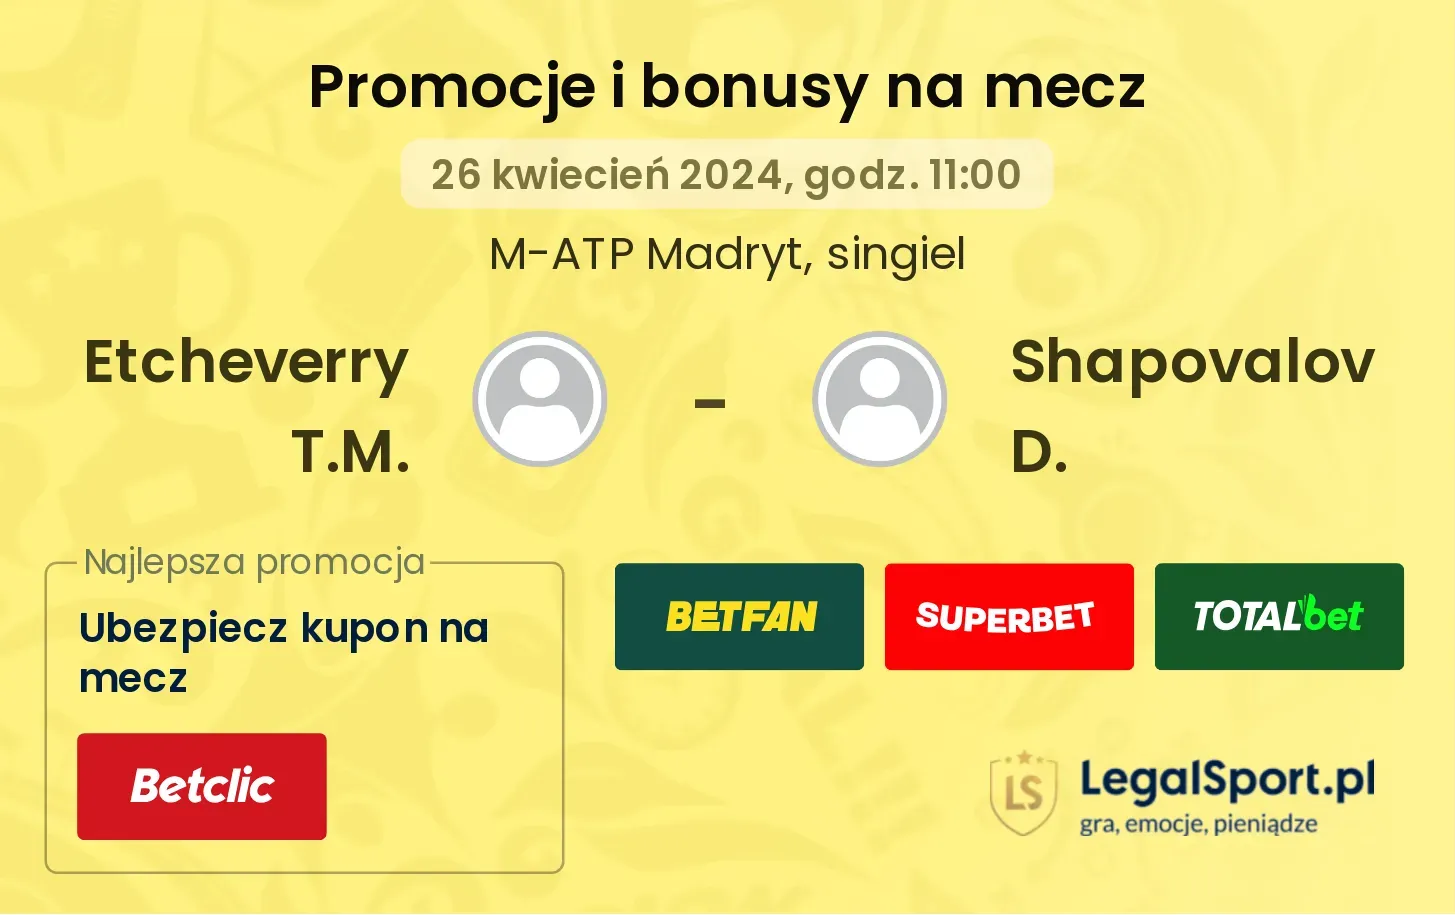 Etcheverry T.M. - Shapovalov D. promocje bonusy na mecz